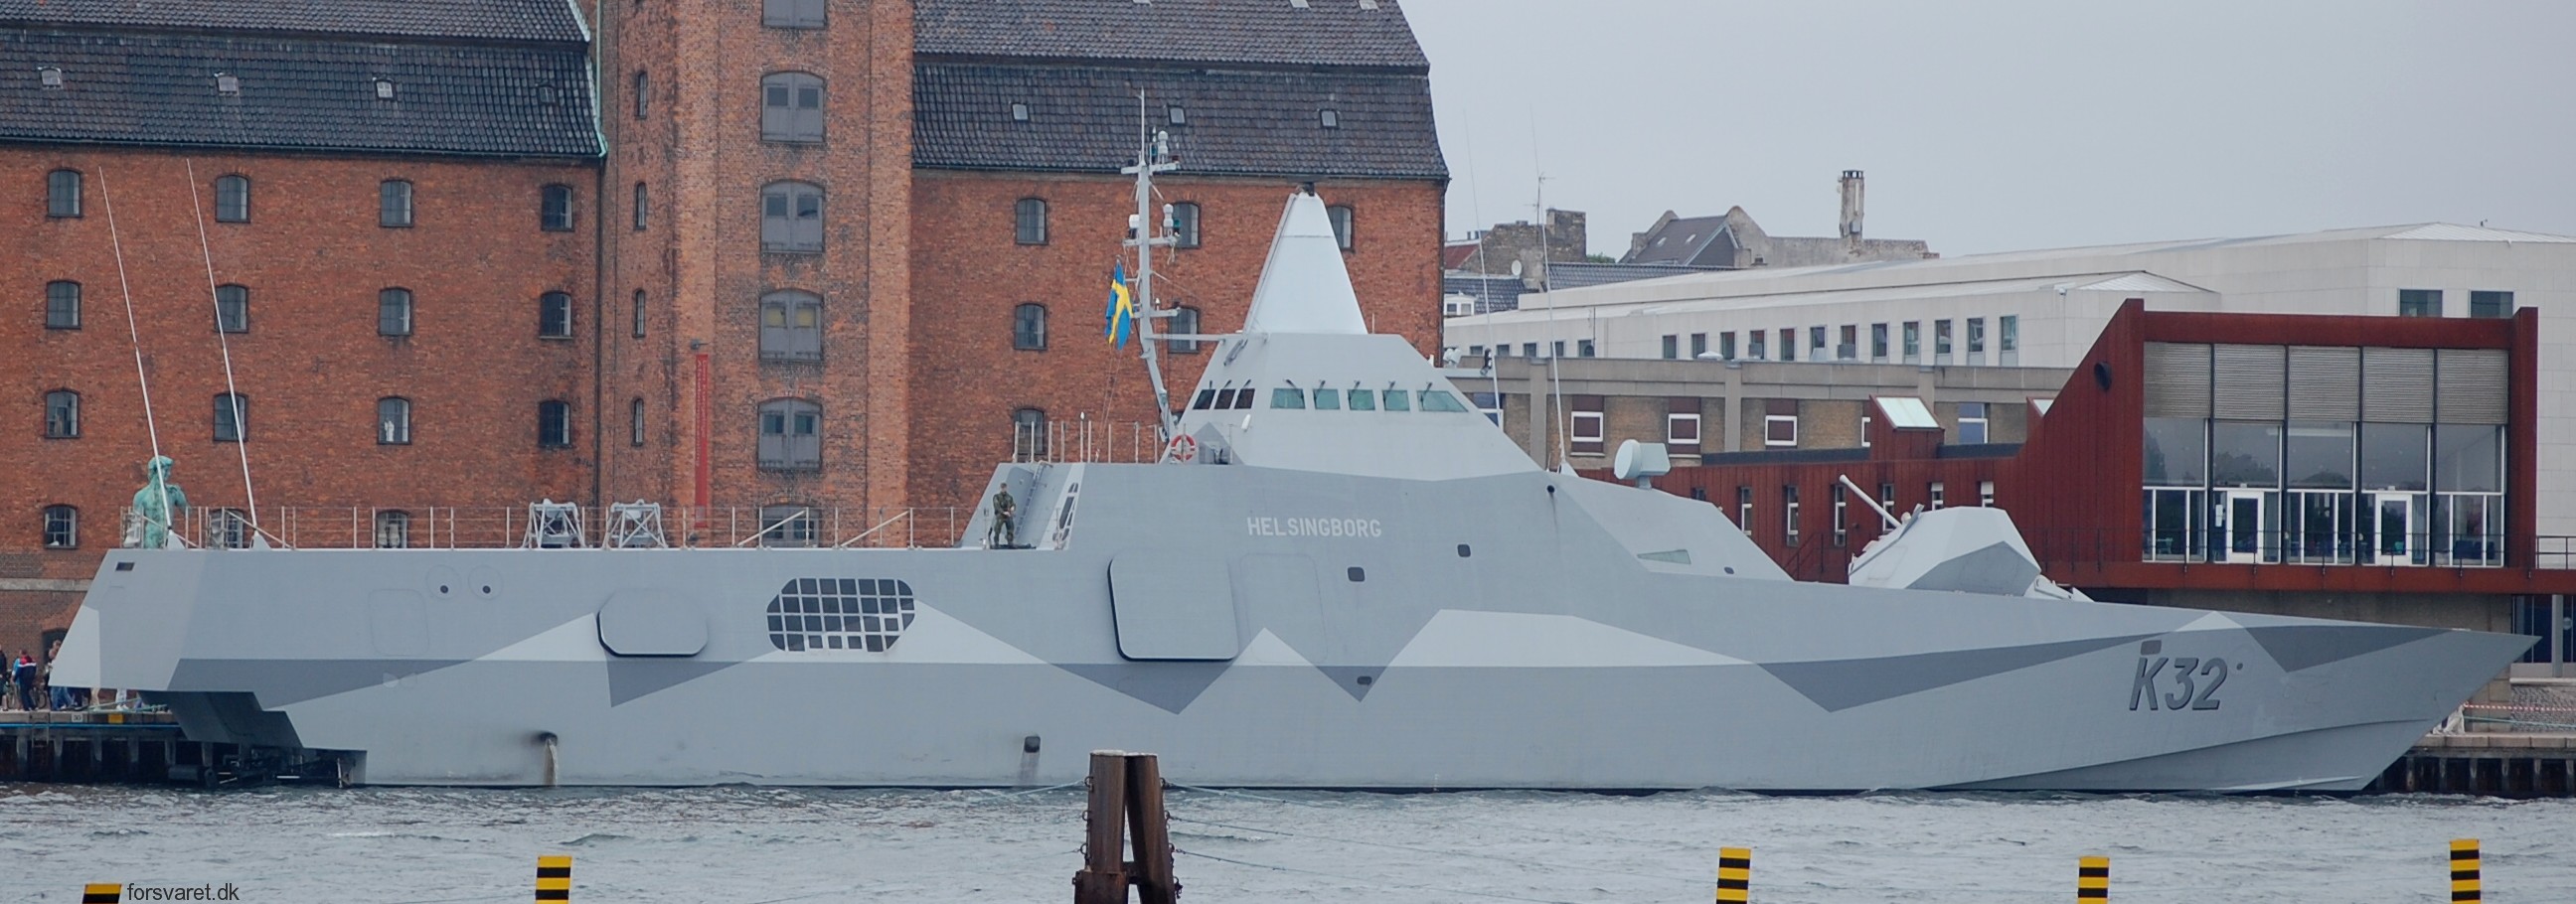 k32 hswms hms helsingborg visby class corvette royal swedish navy svenska marinen 06